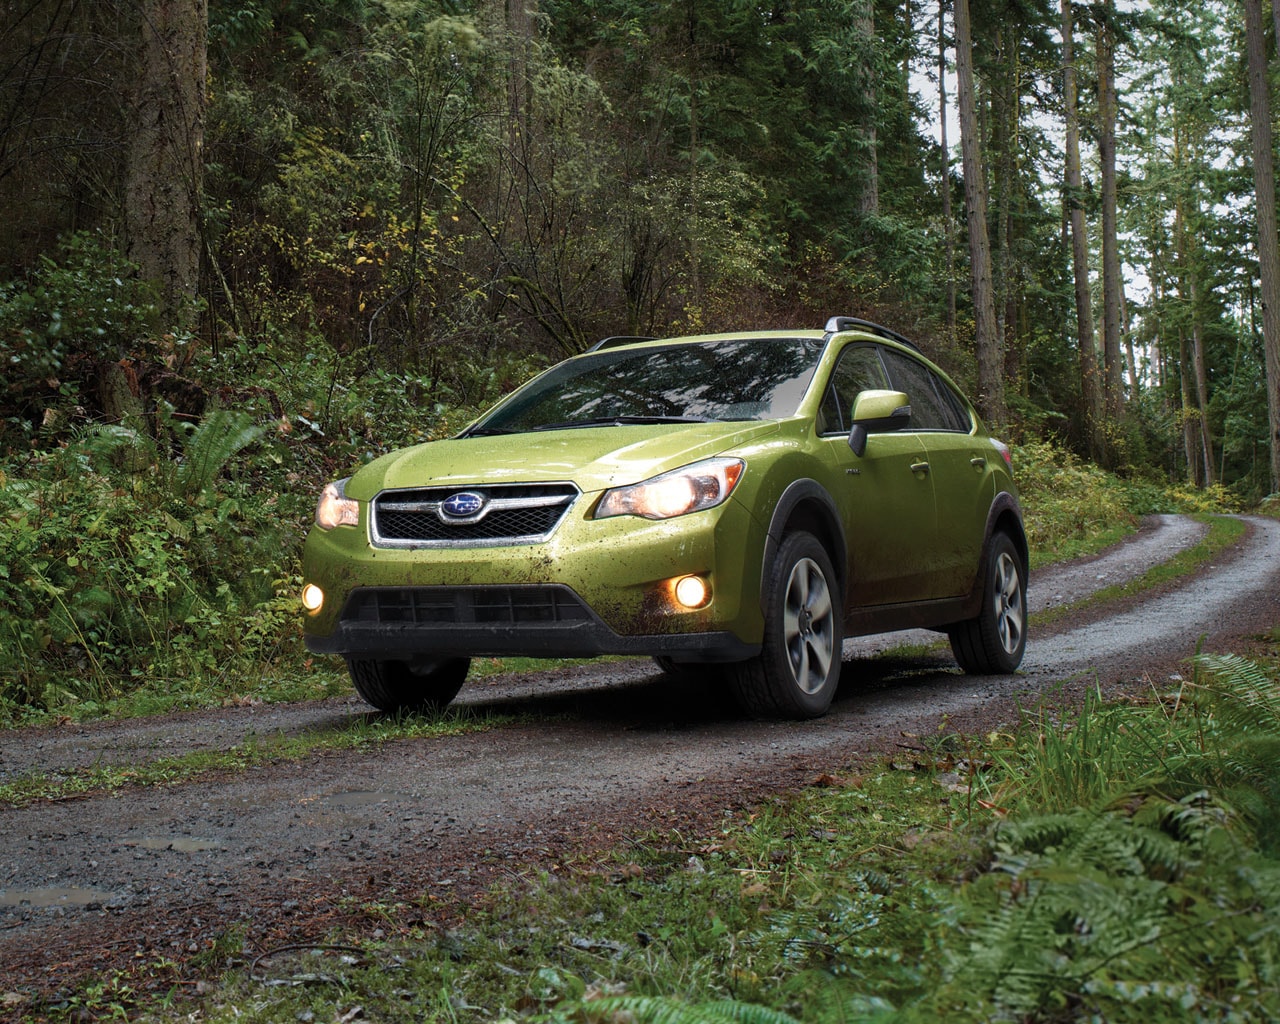 Subaru Xv Crosstrek Gets Updated For The 2015 Model Year